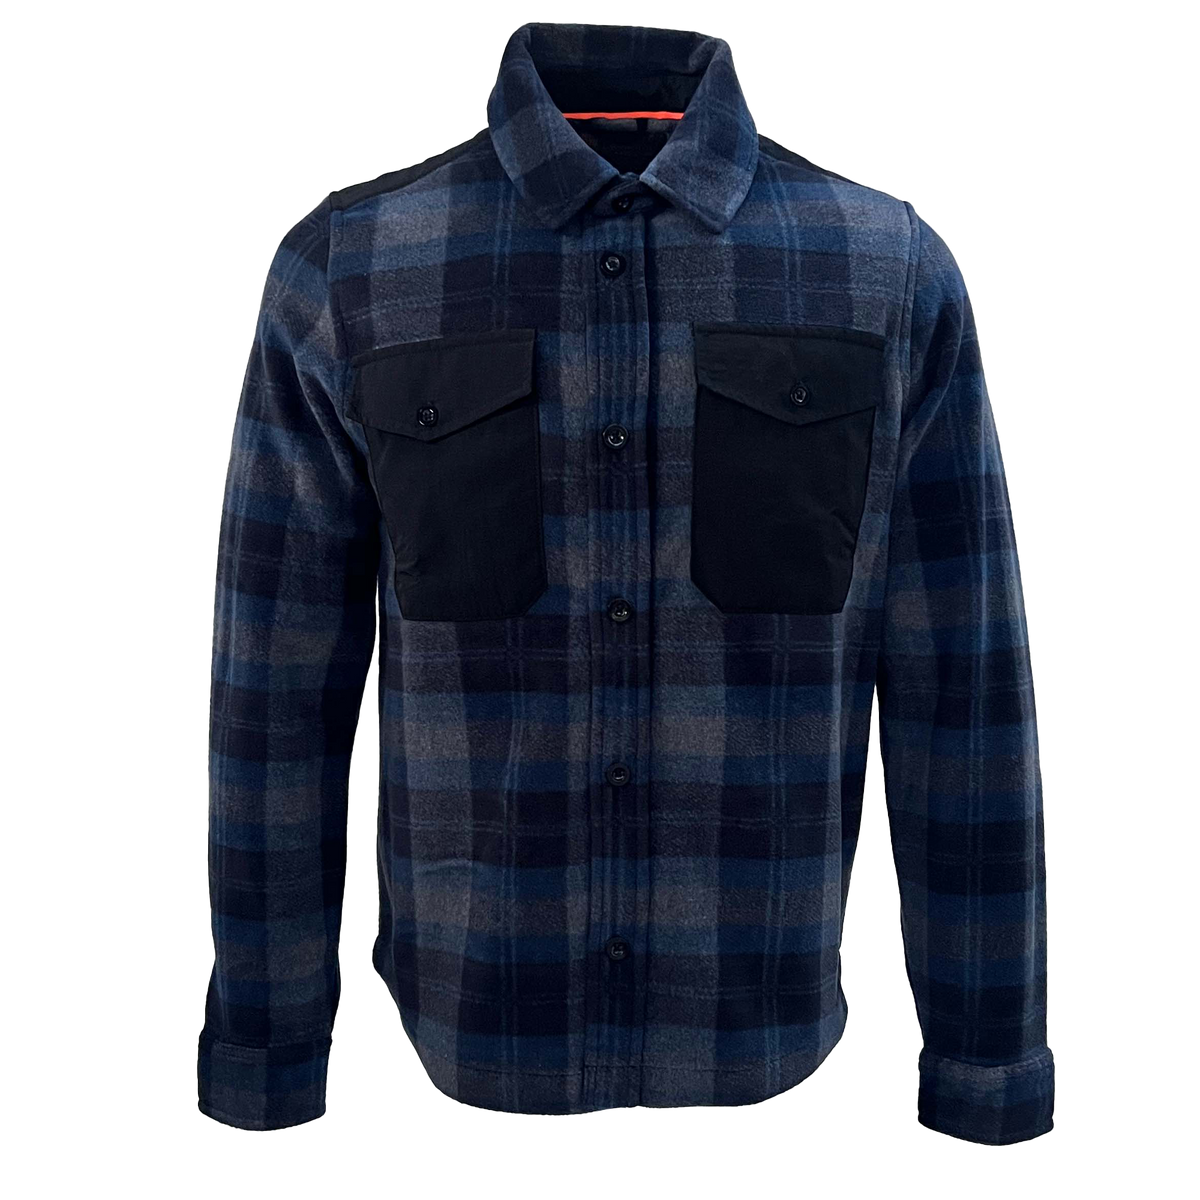 Wake Men's Long Sleeve Fleece Fisherman Sailor Plaid Patterned Blue Shirt Jacket